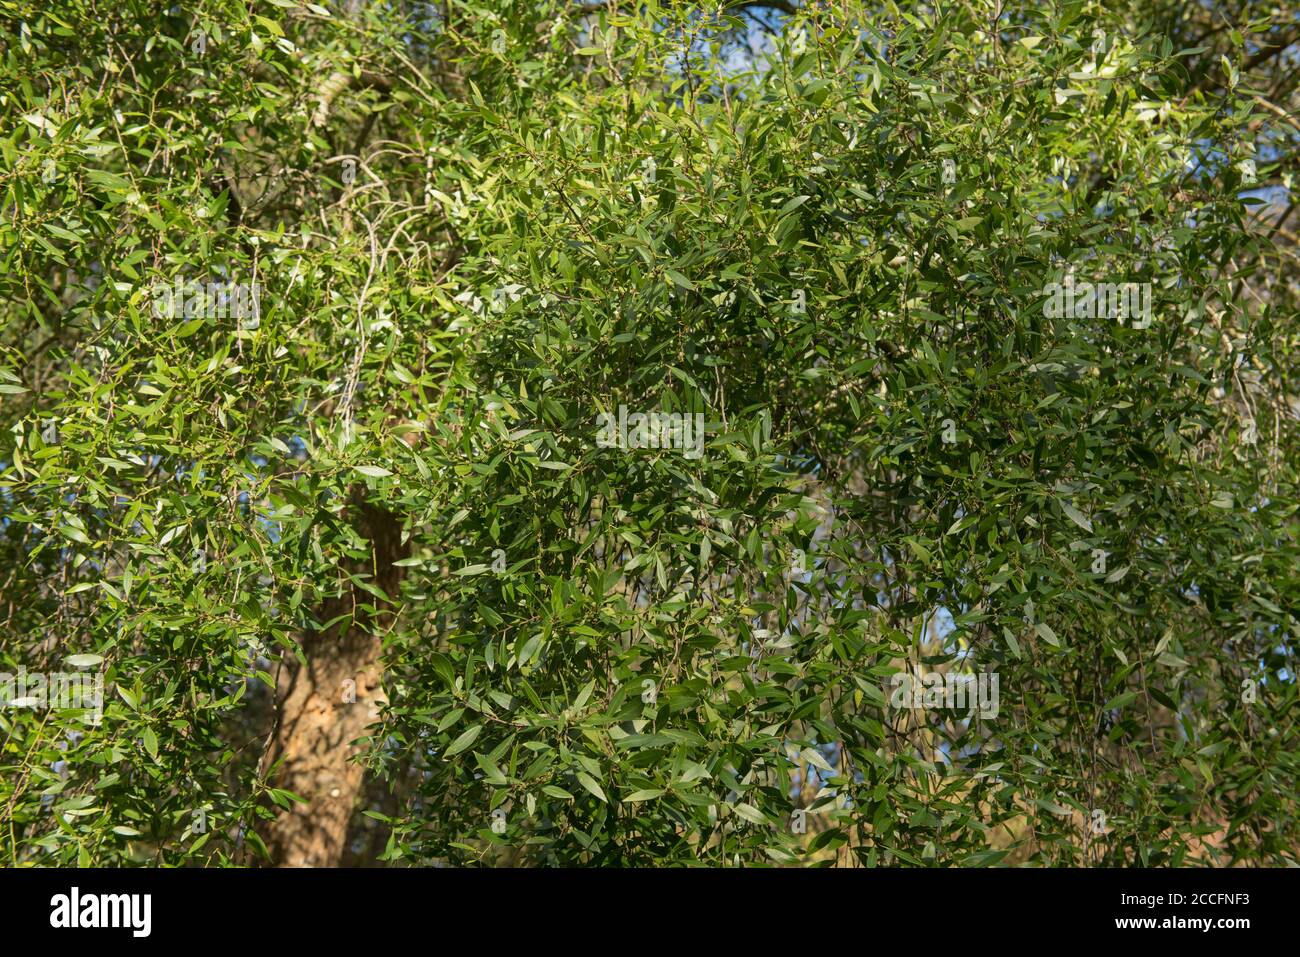 Feuillage vert de l'Evergreen Mayten chilien ou Maiten Tree (Maytenus boaria) dans un jardin boisé du Devon rural, Angleterre, Royaume-Uni Banque D'Images